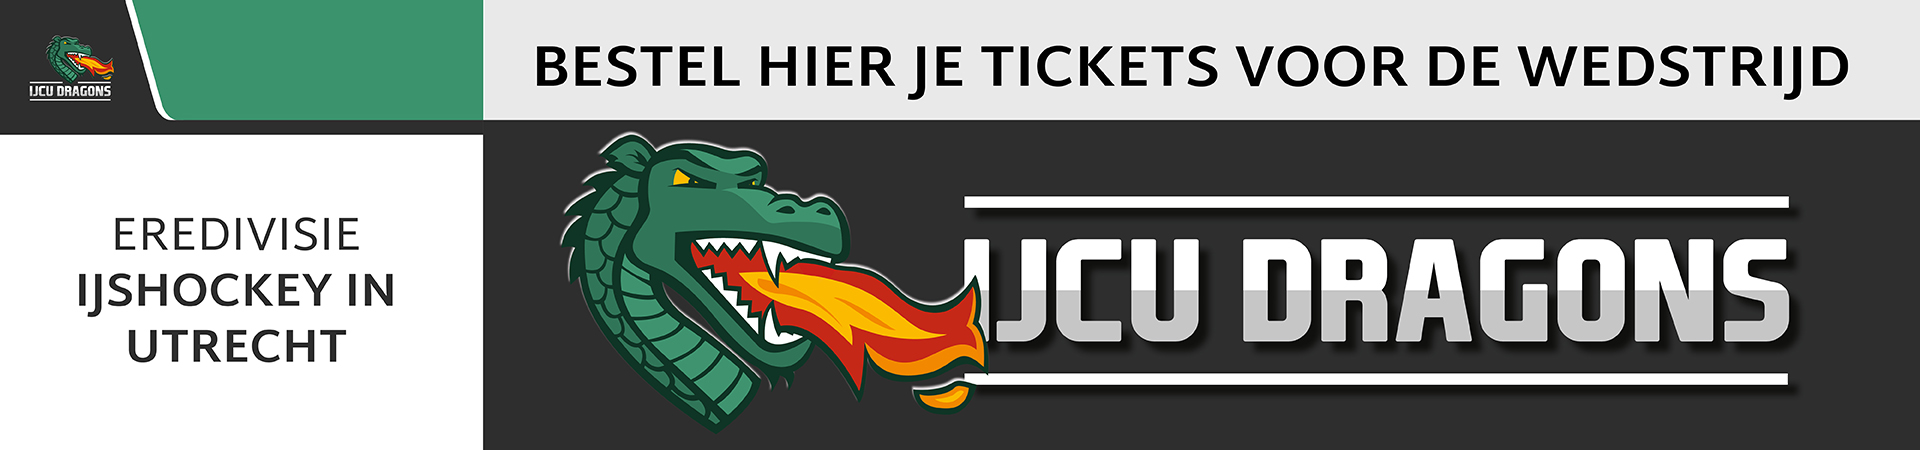 IJCU Dragons Utrecht tickets